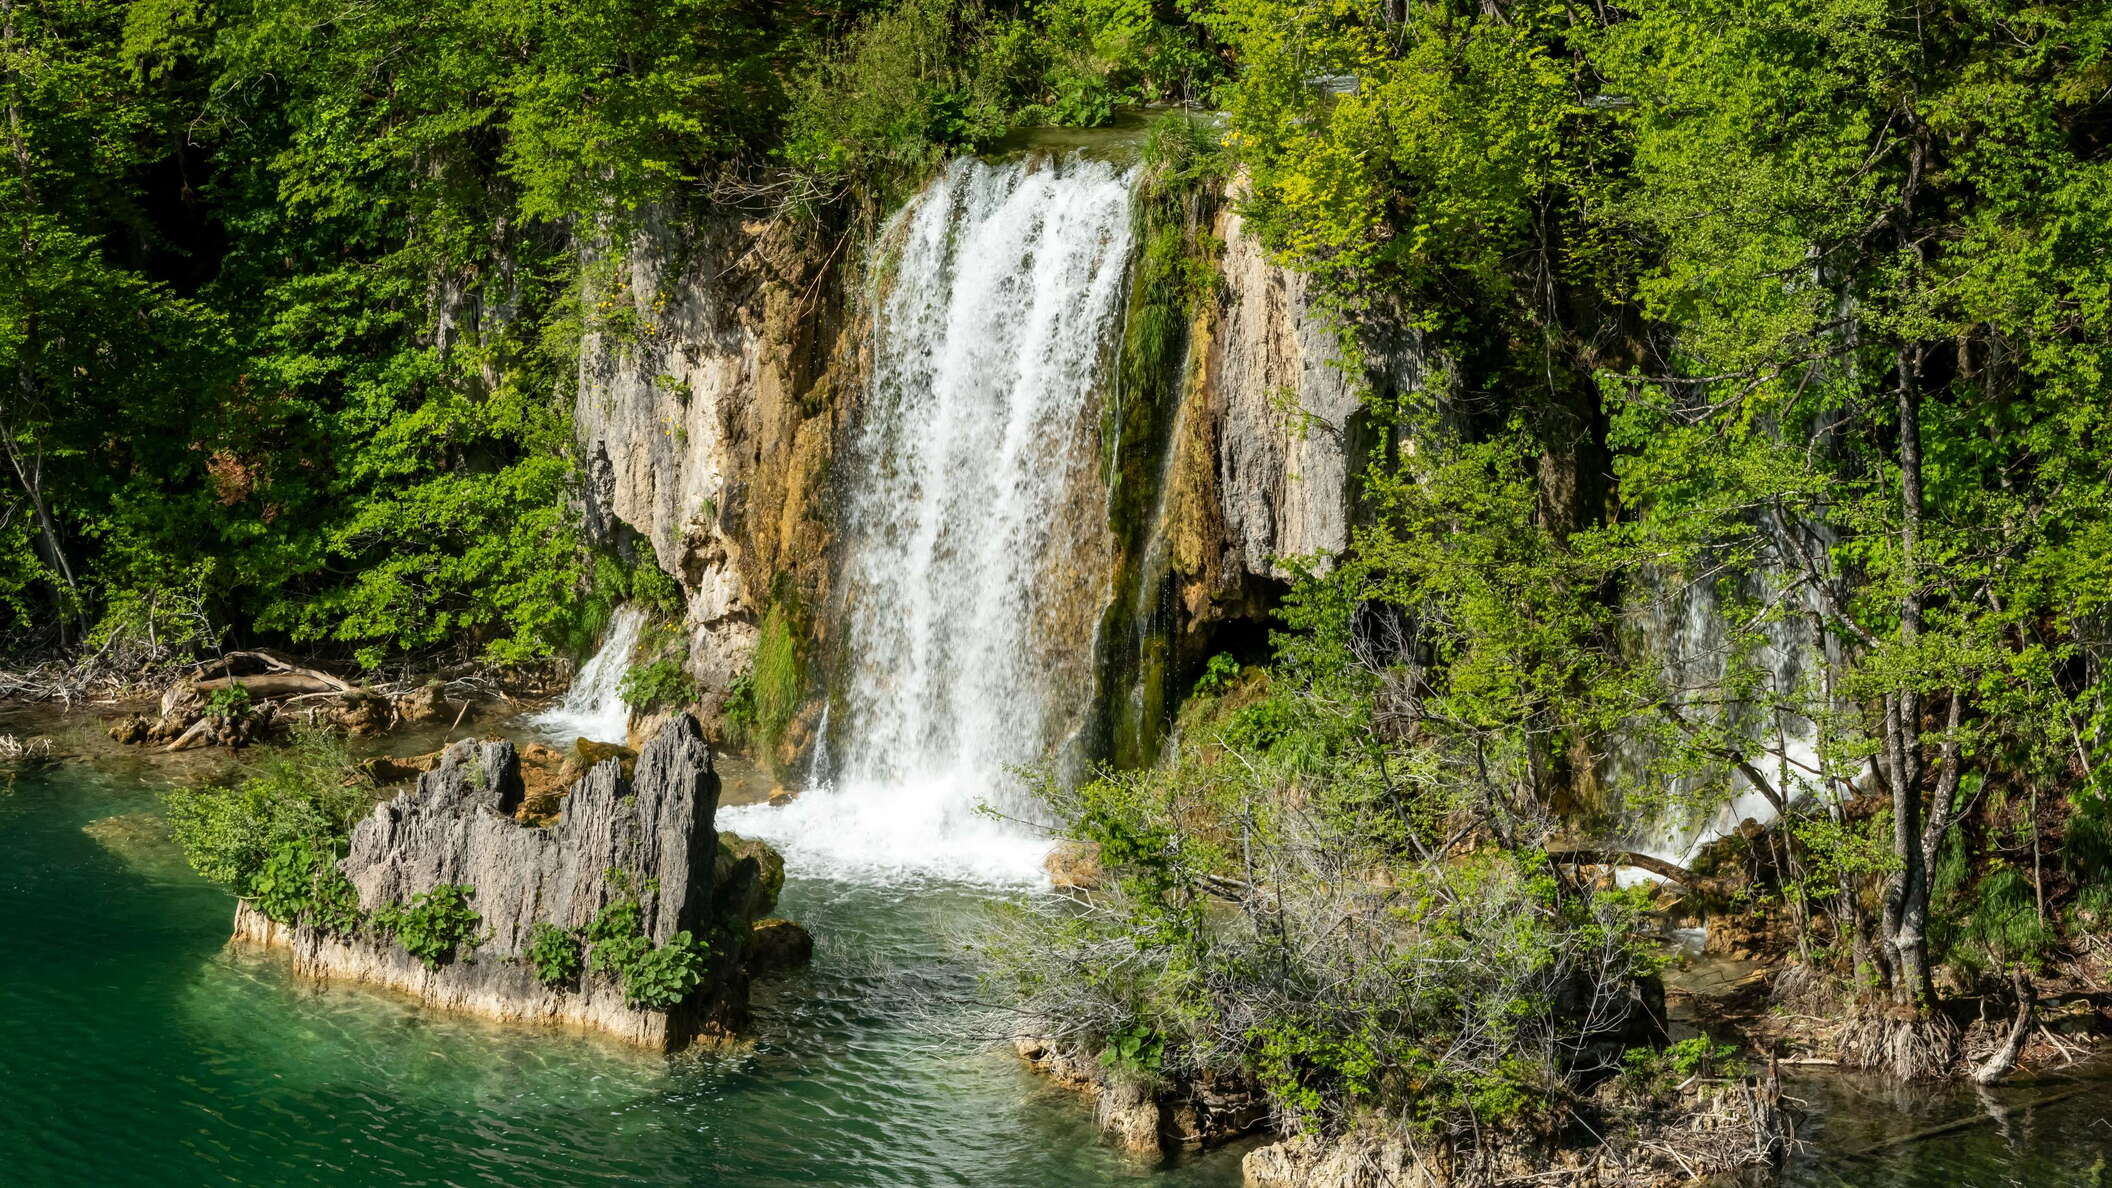 Plitvička jezera | Jarkuše waterfall